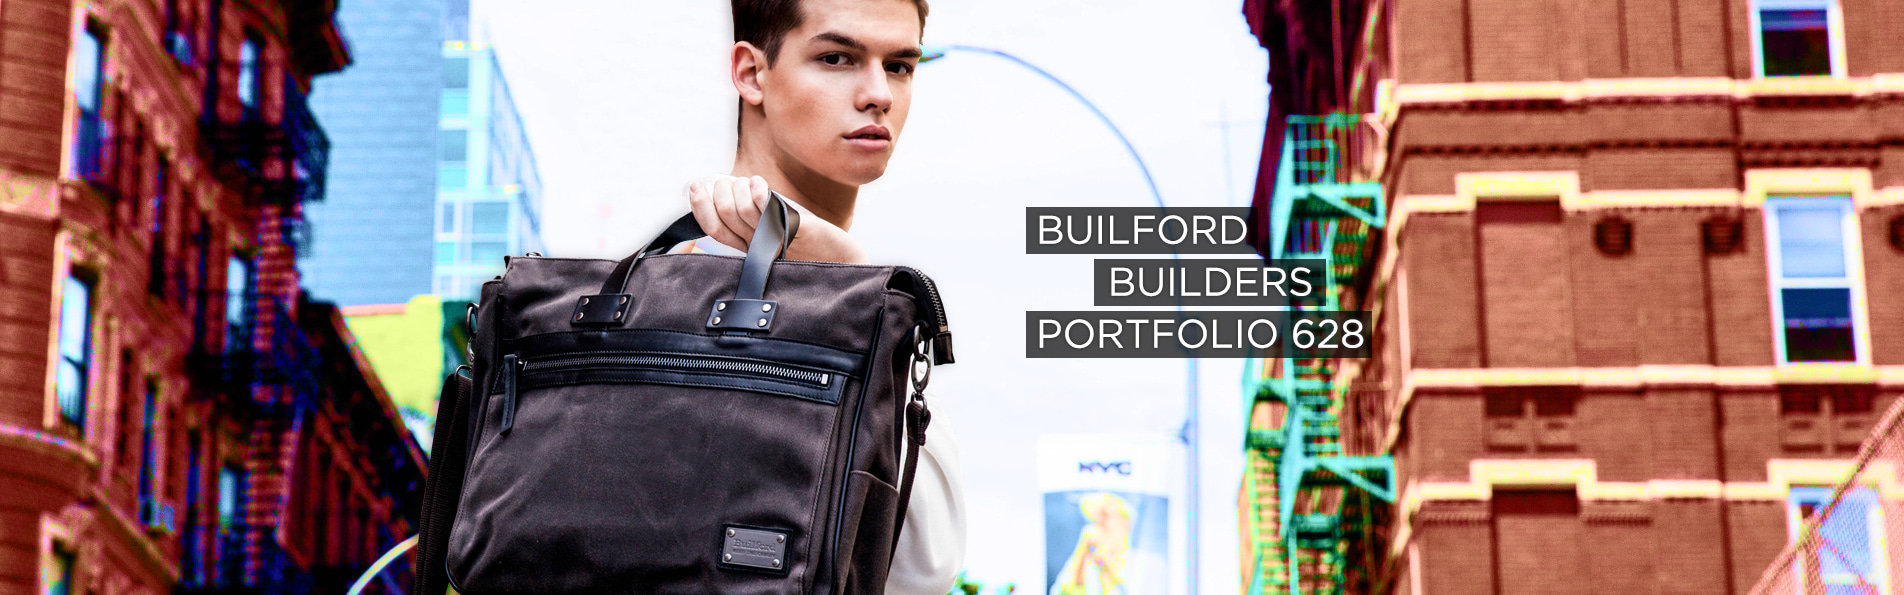 builford builders portfolio 628